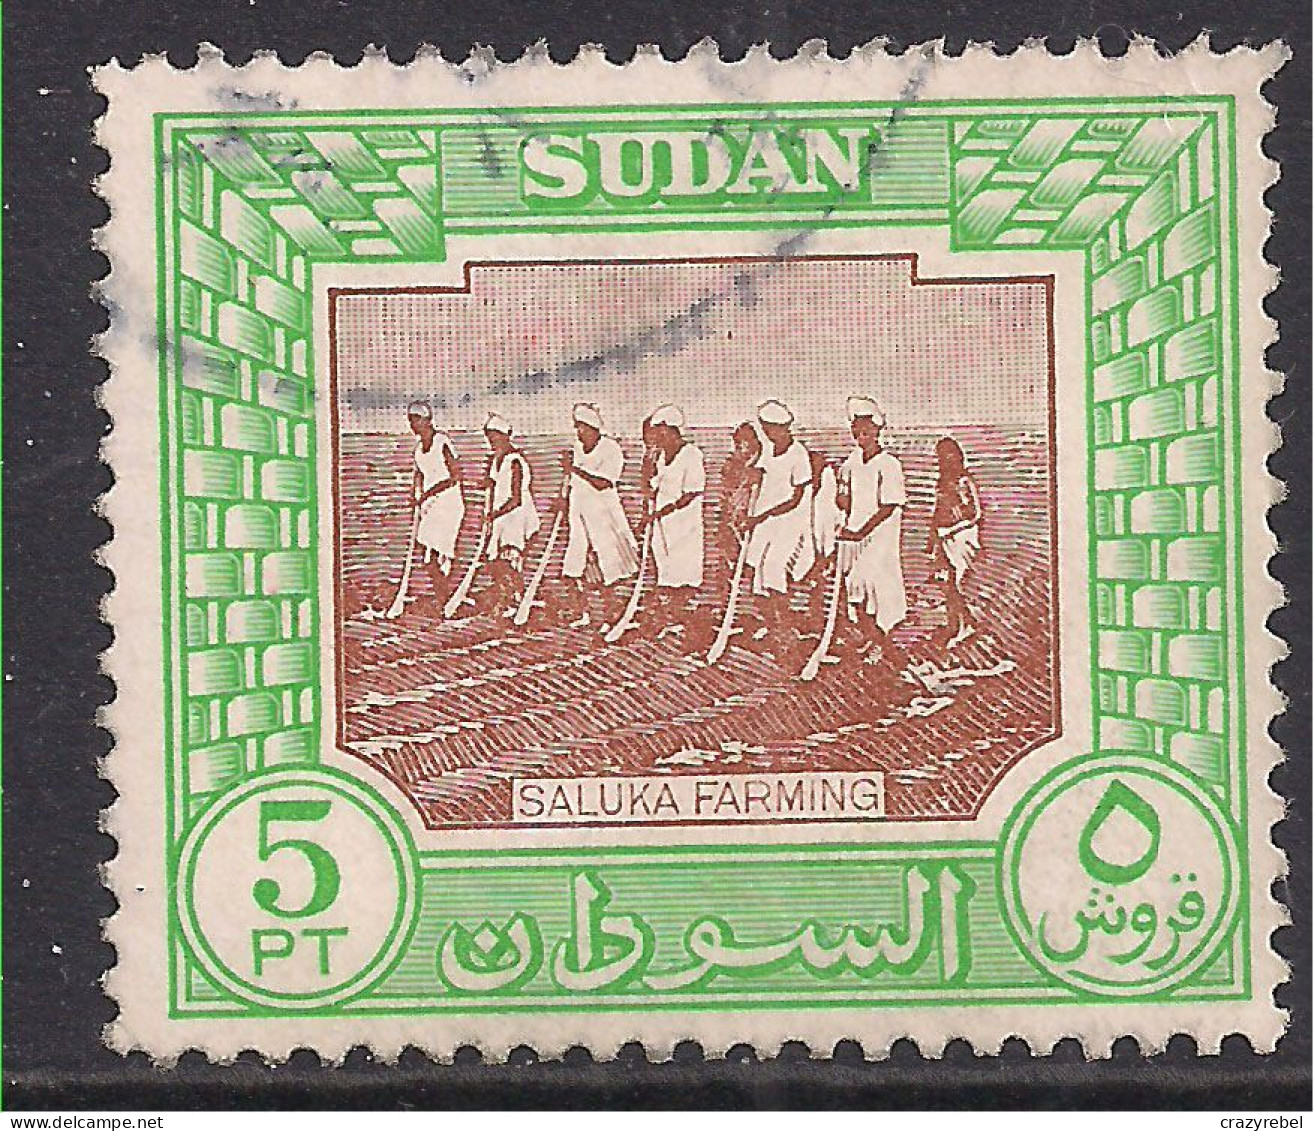 Sudan 1951 KGV1 5pt Saluka Farming Used SG 134 ( D328 ) - Sudan (...-1951)